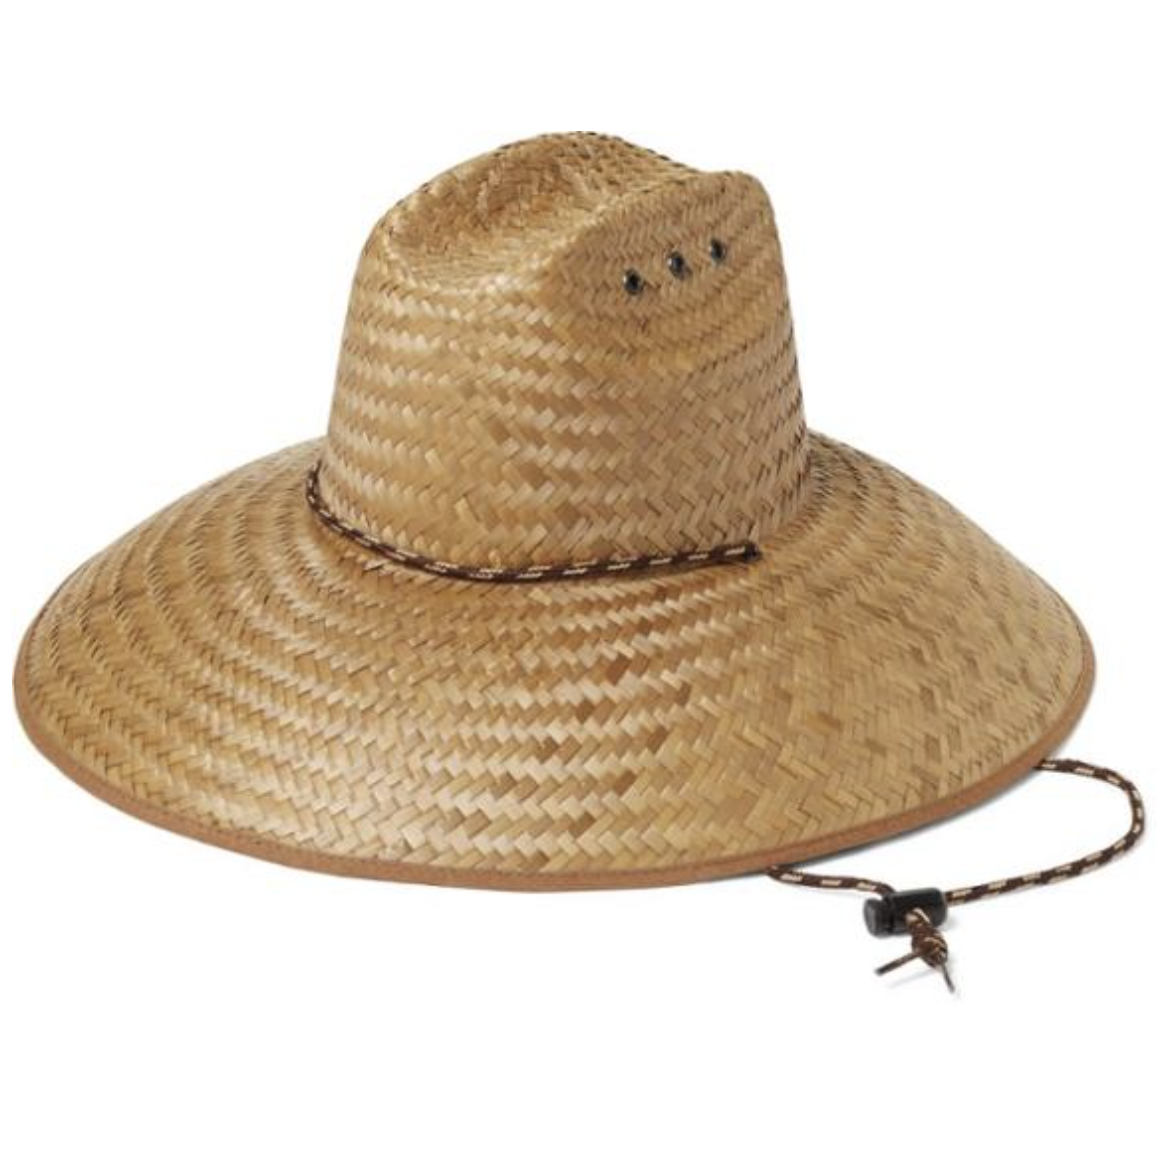 Straw gardening hat